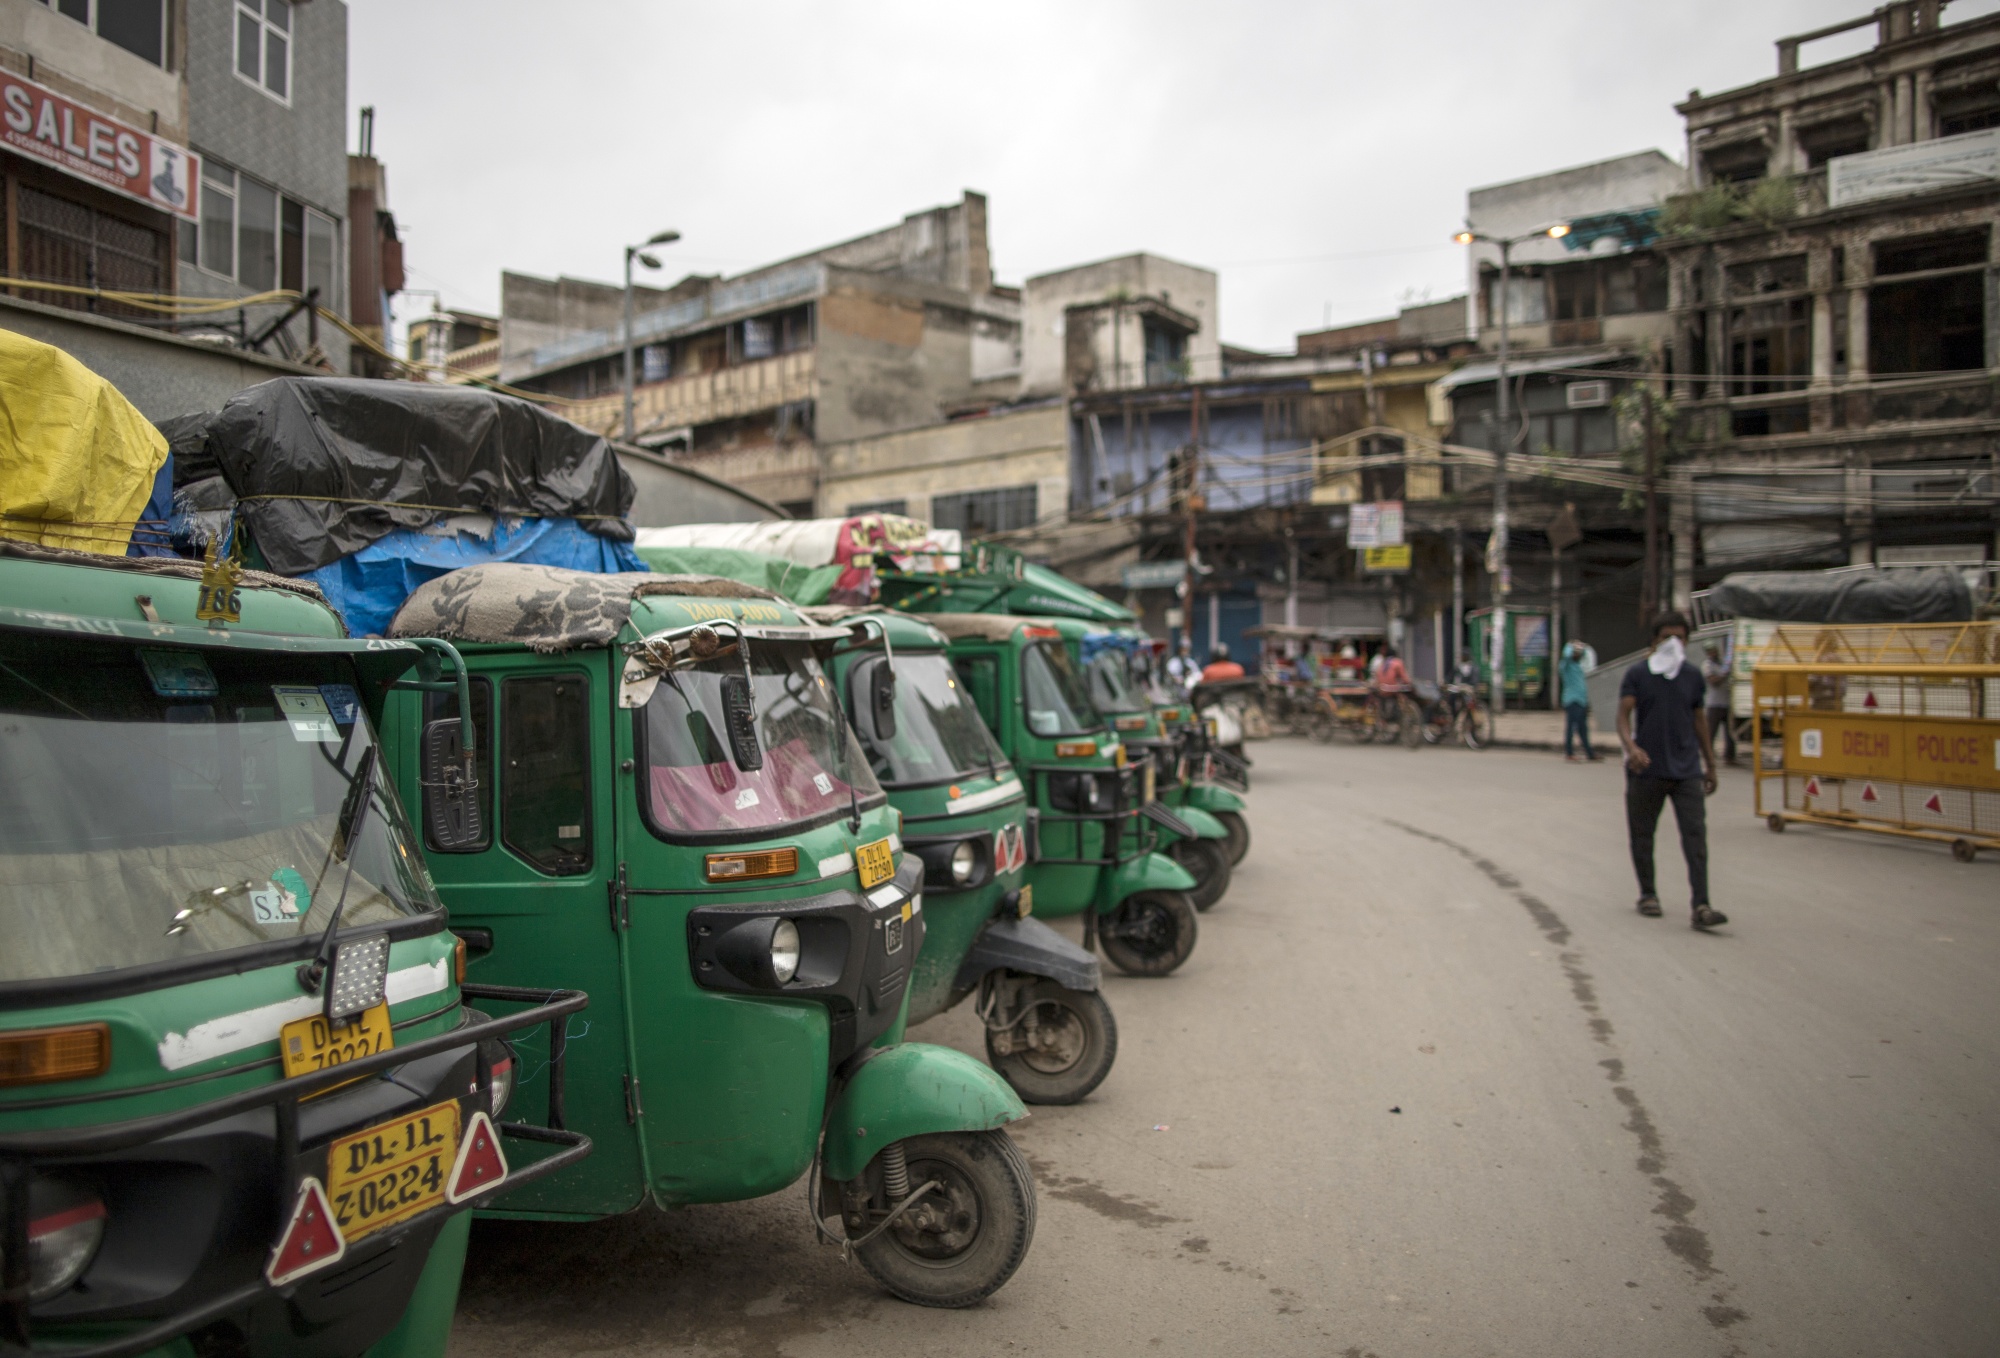 Auto rickshaws sit parked on a street in New Delhi on Aug. 31.